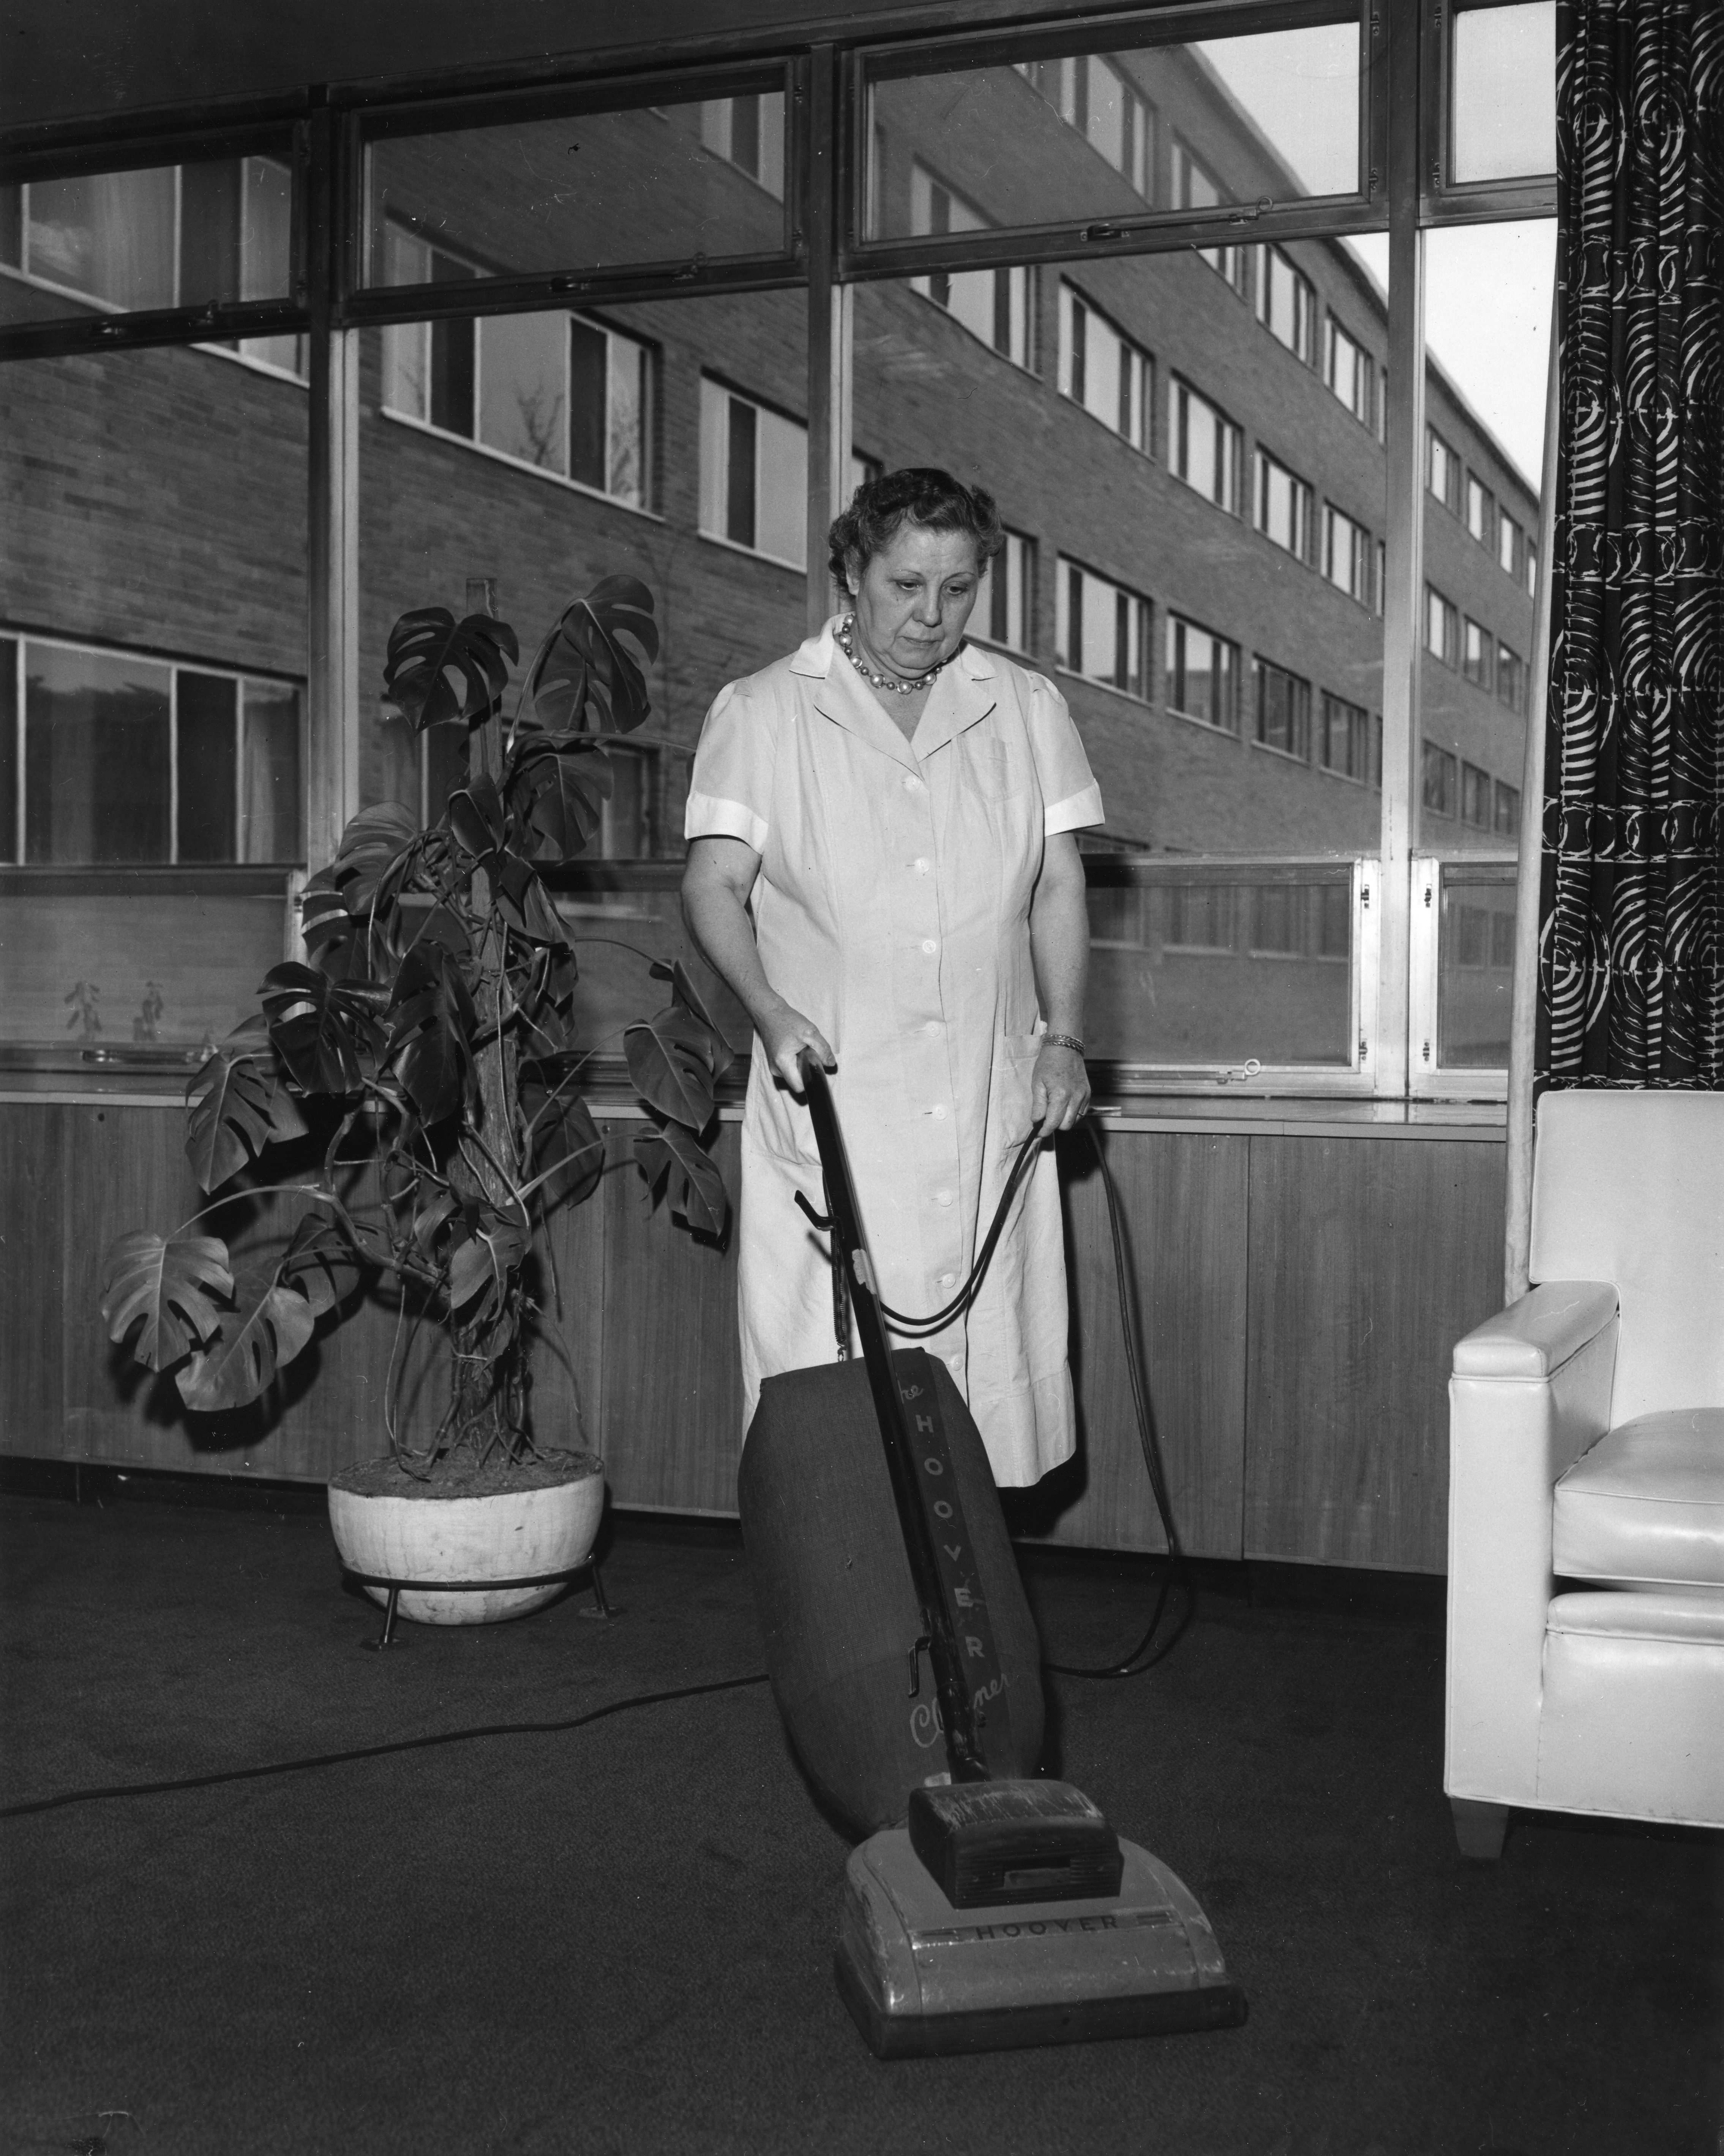 A housekeeper vacuuming, 1957